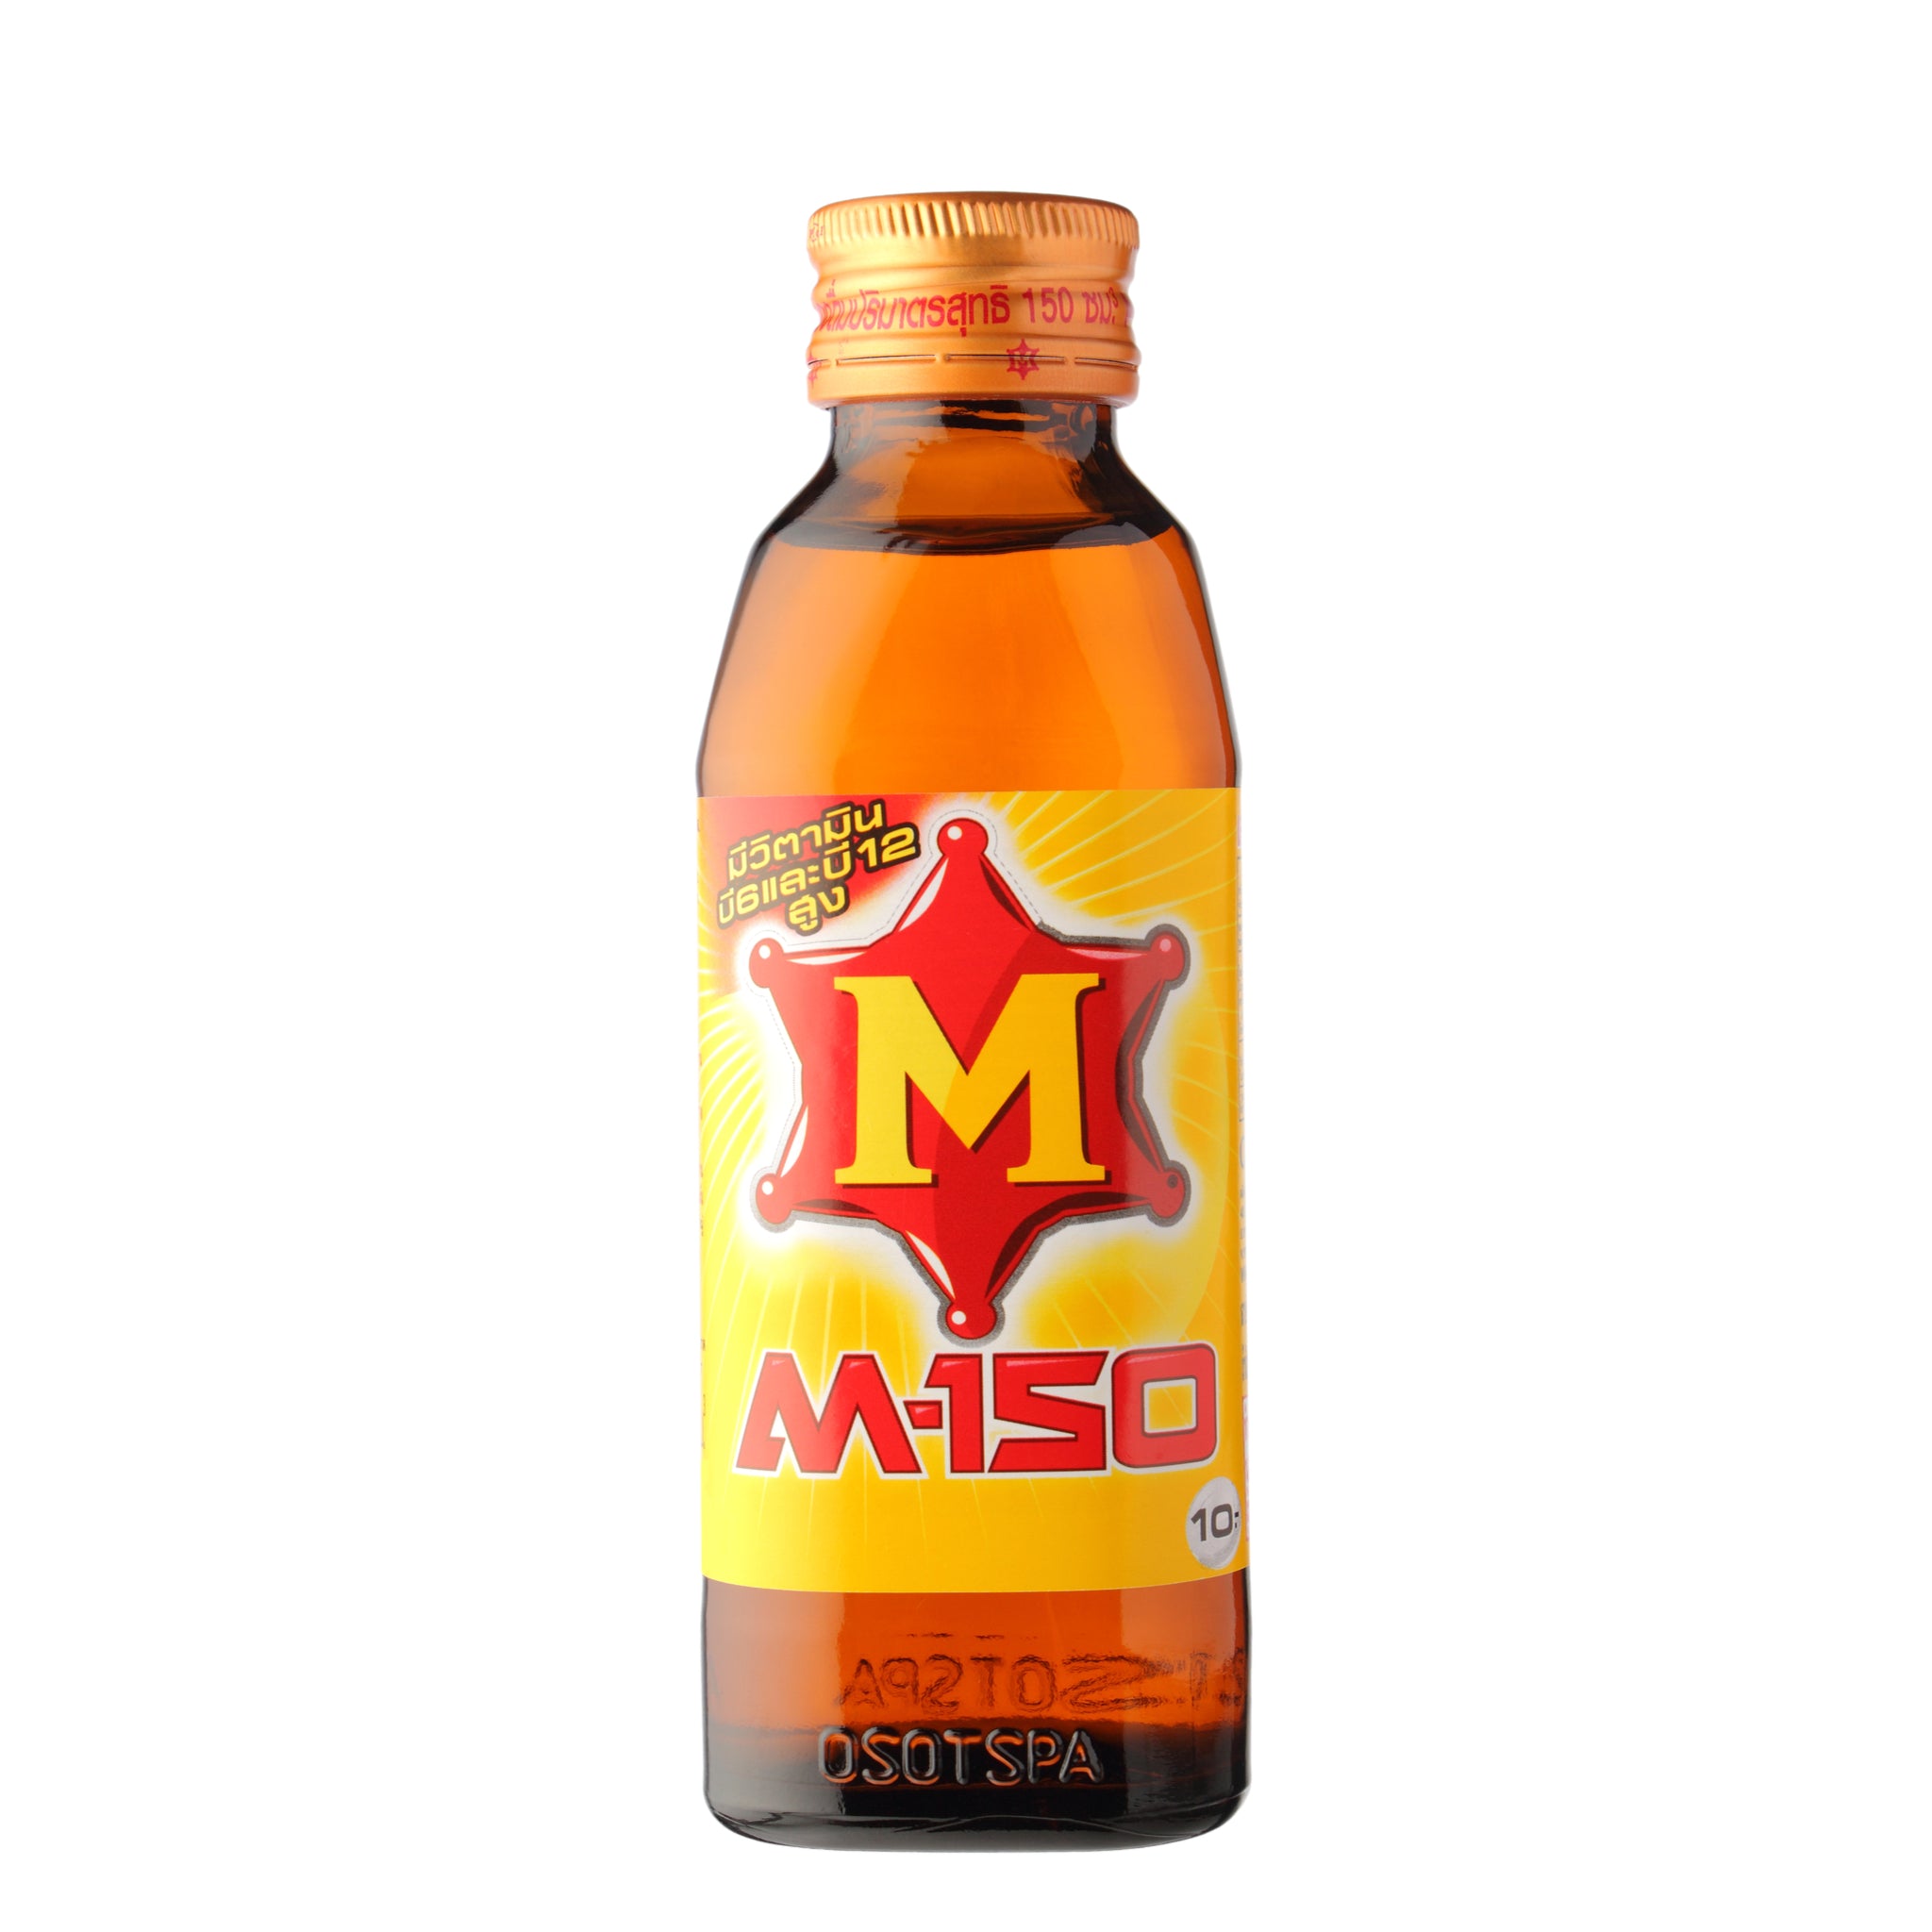 M 150 M150 Thai  energy drink  150ml by Osotspa Thai  